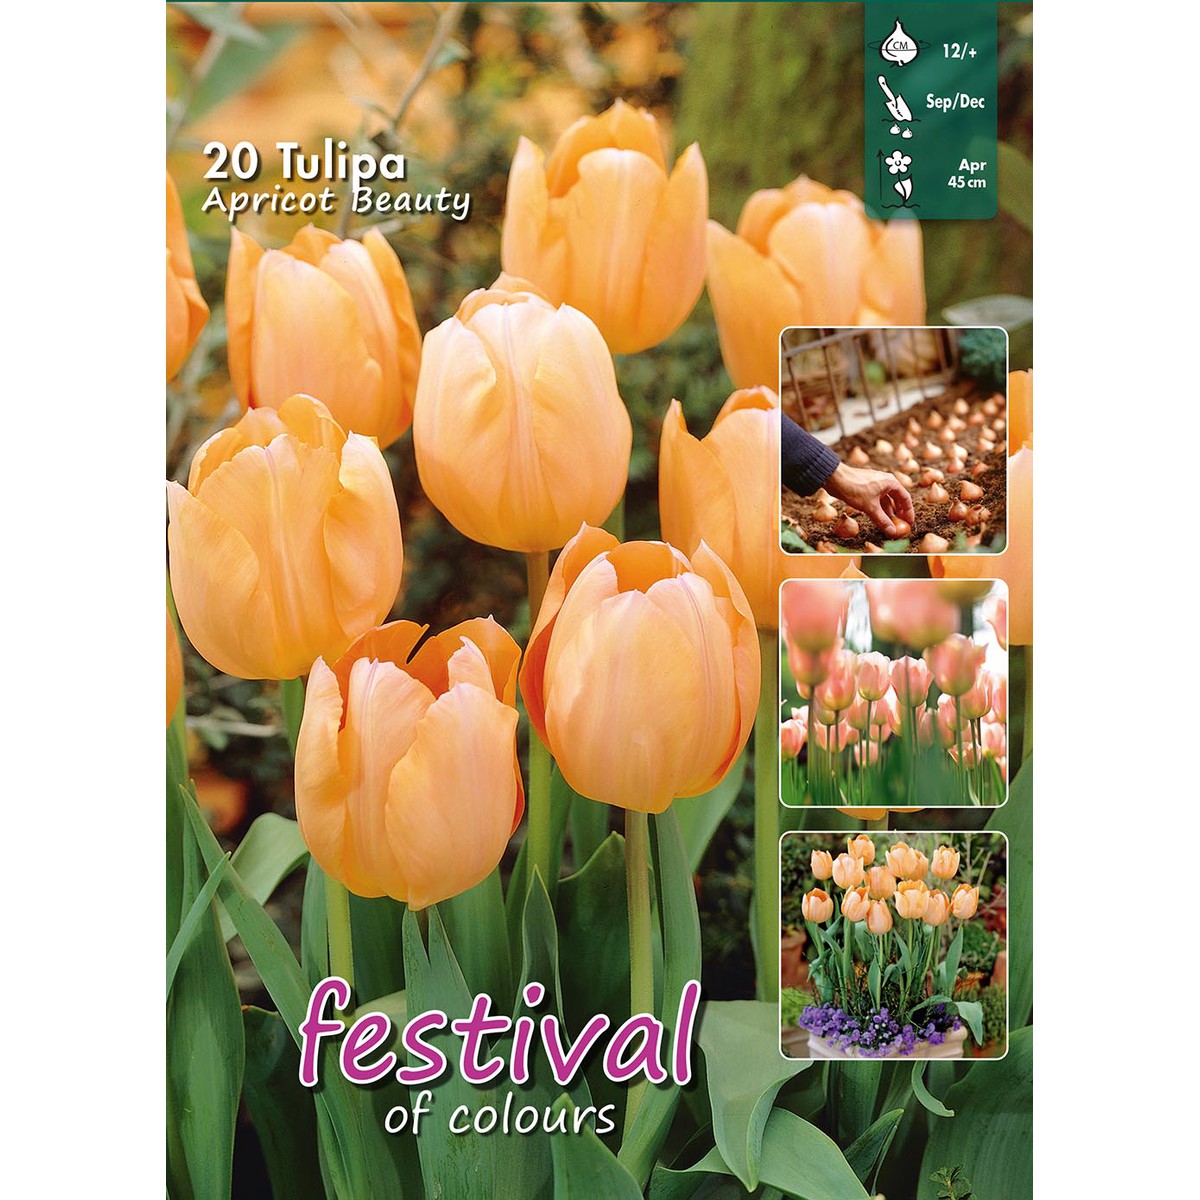   Tulipes 'Abricot Beauty'  20 pcs 12/+